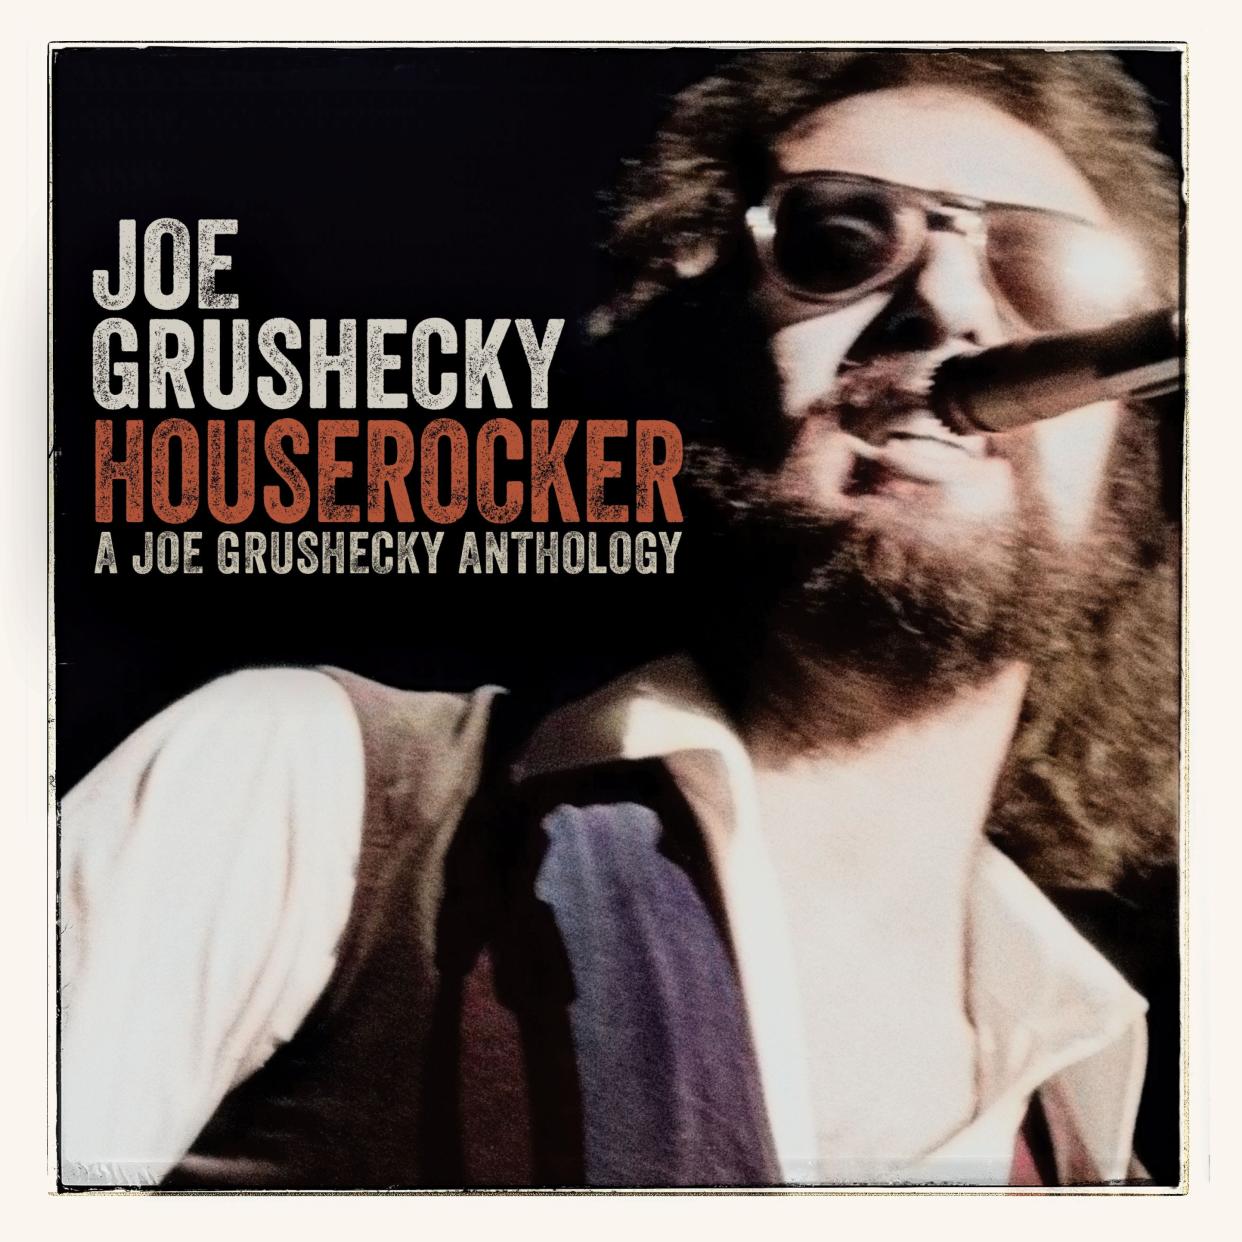 The cover of the 36-track Joe Grushecky anthology album.